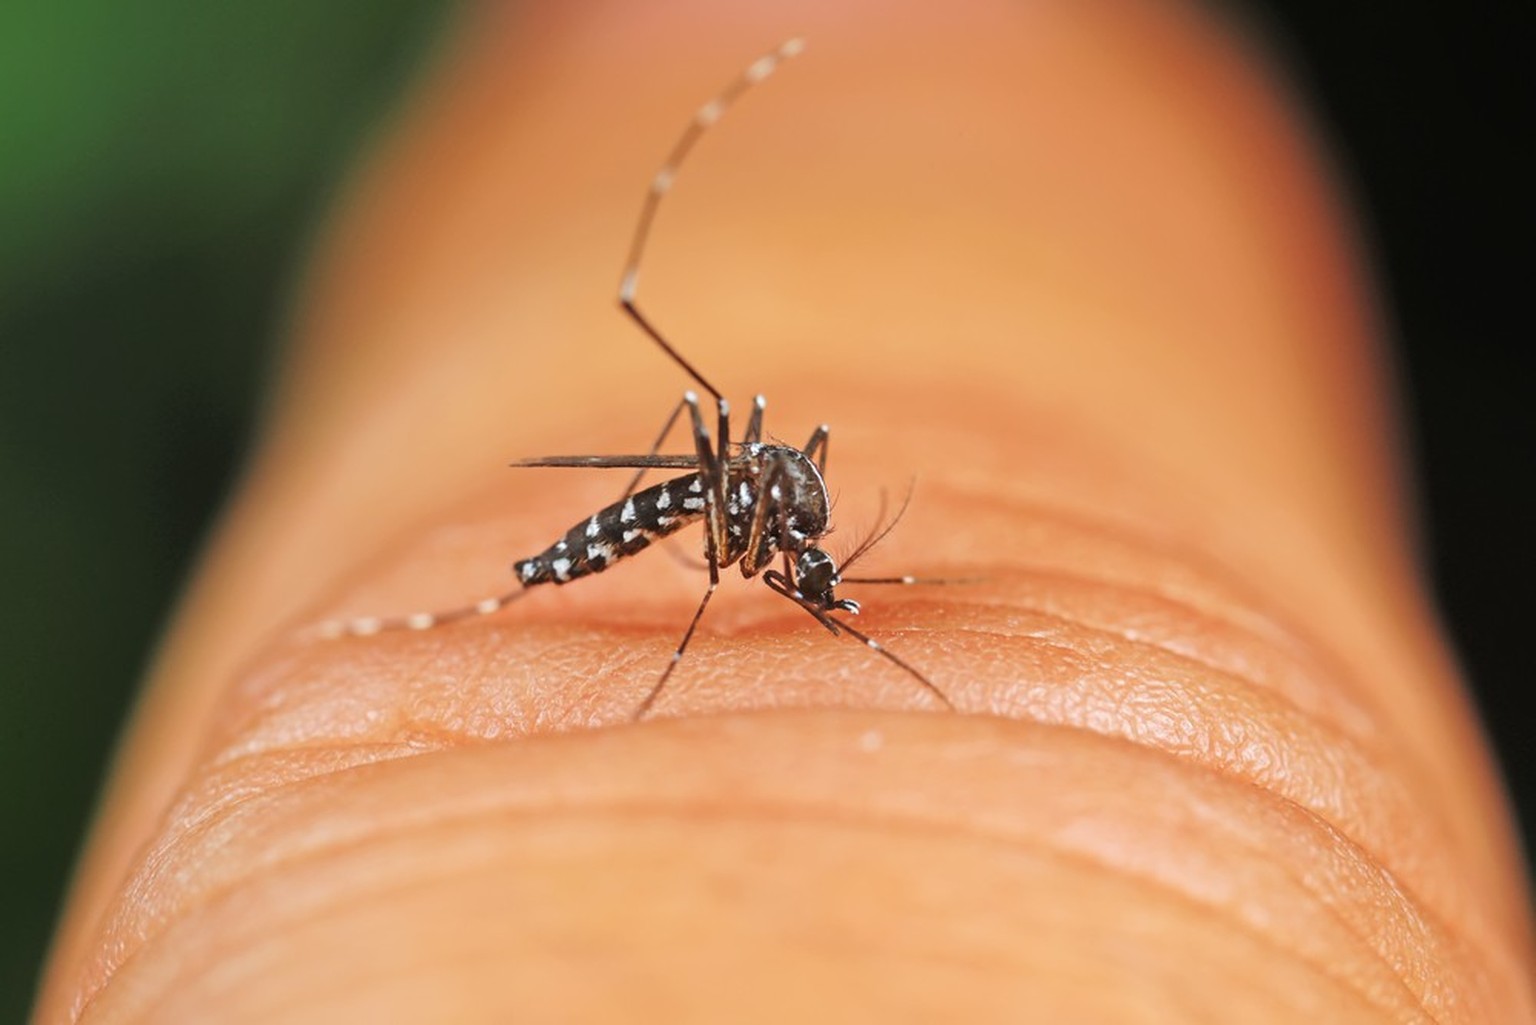 Tigermücke (Aedes albopictus)